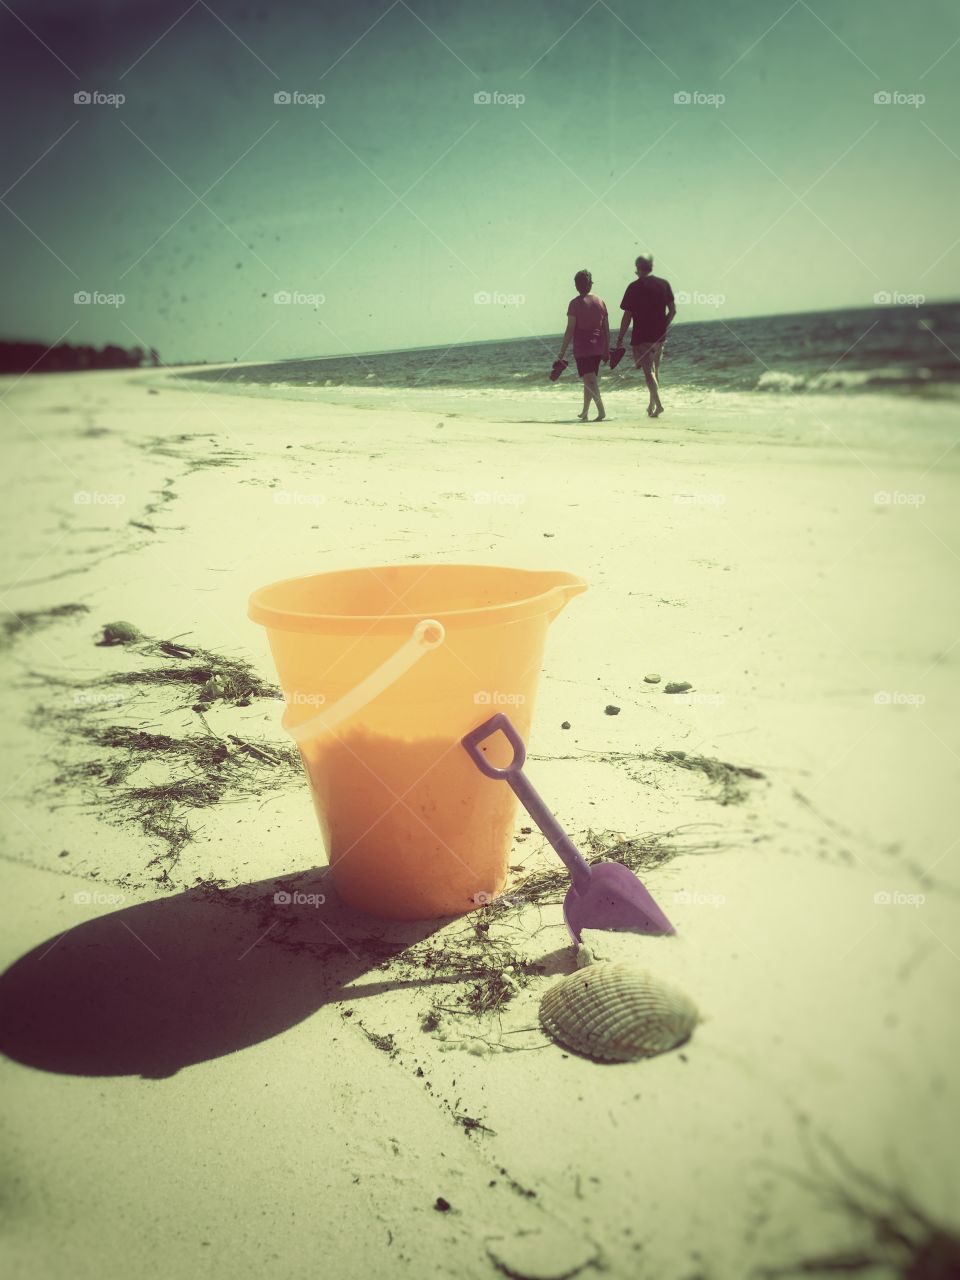 Beach Bucket